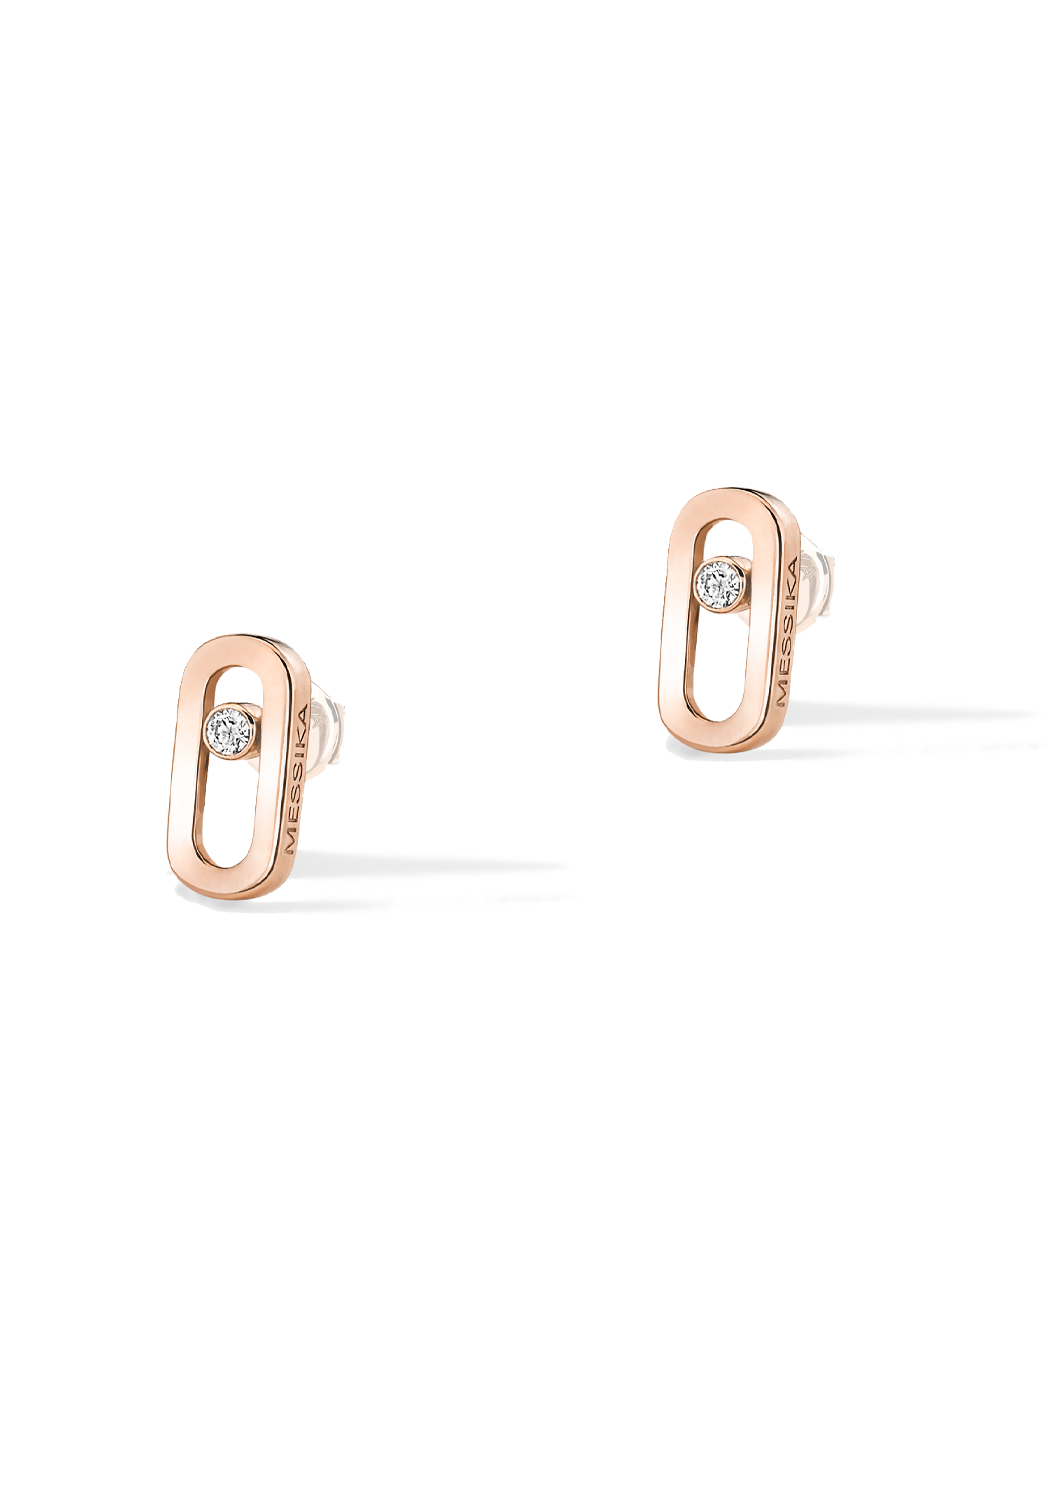 Messika Move Uno 18K Rose Gold Diamond Stud Earrings | Ref. 12305-RG | OsterJewelers.com